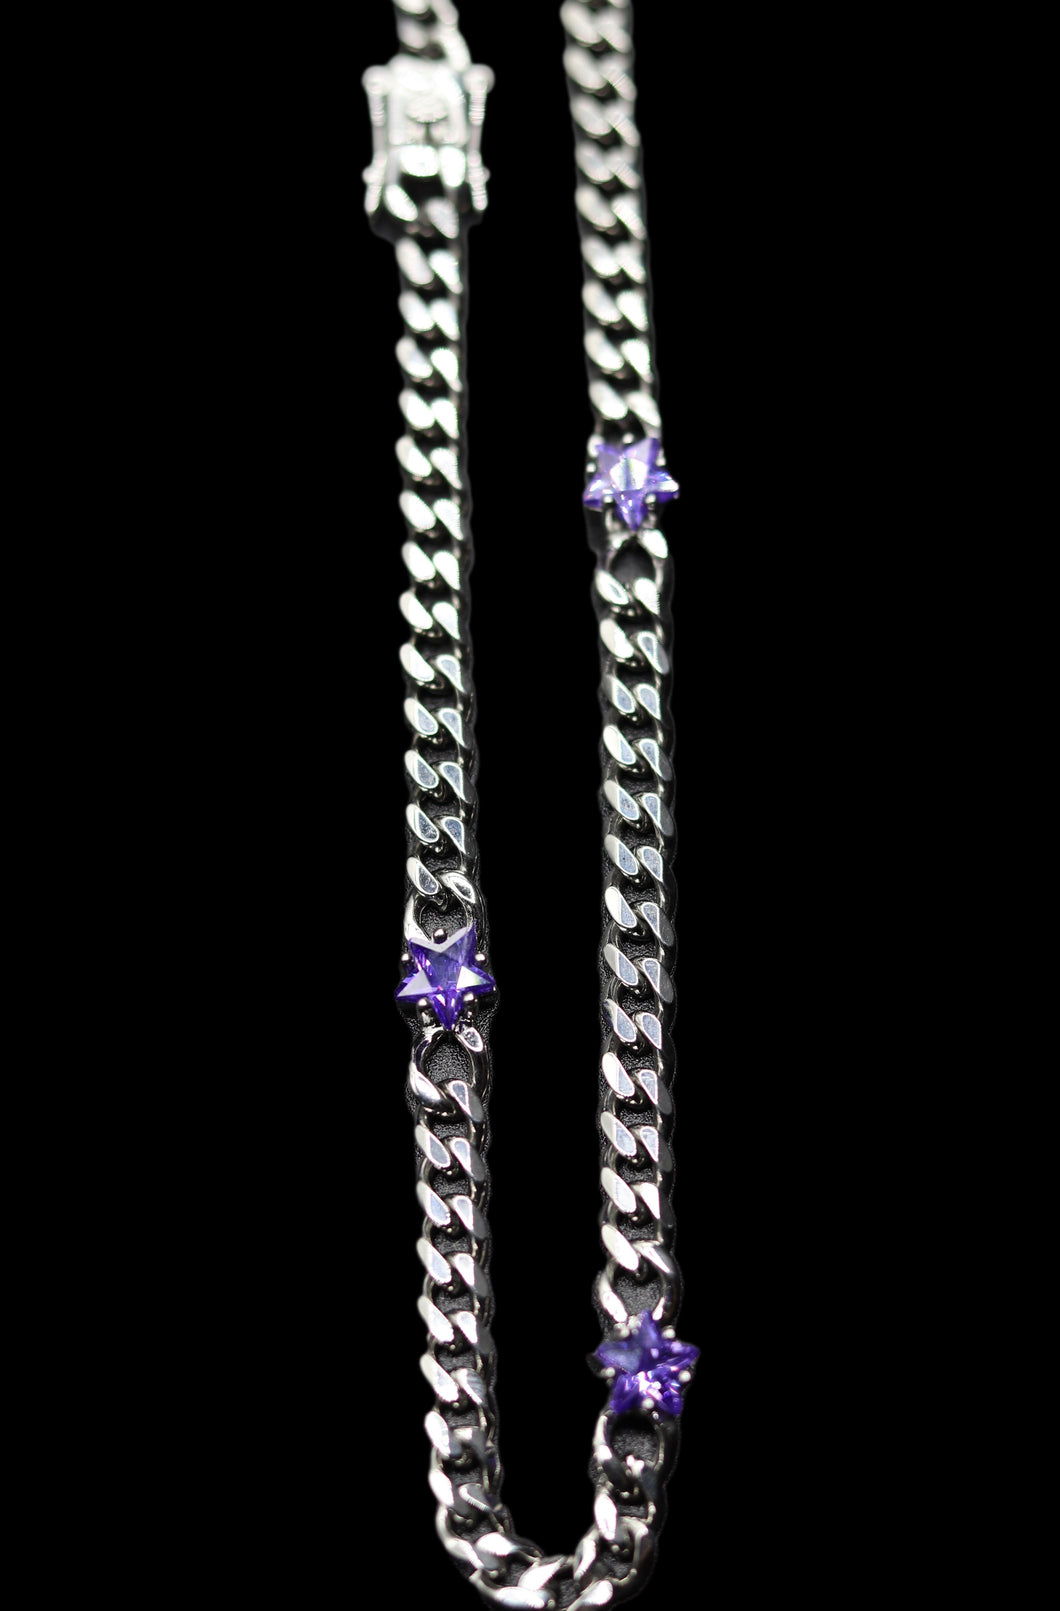 Star Nightmare Necklace - Fashion Jewelry by Yordy.